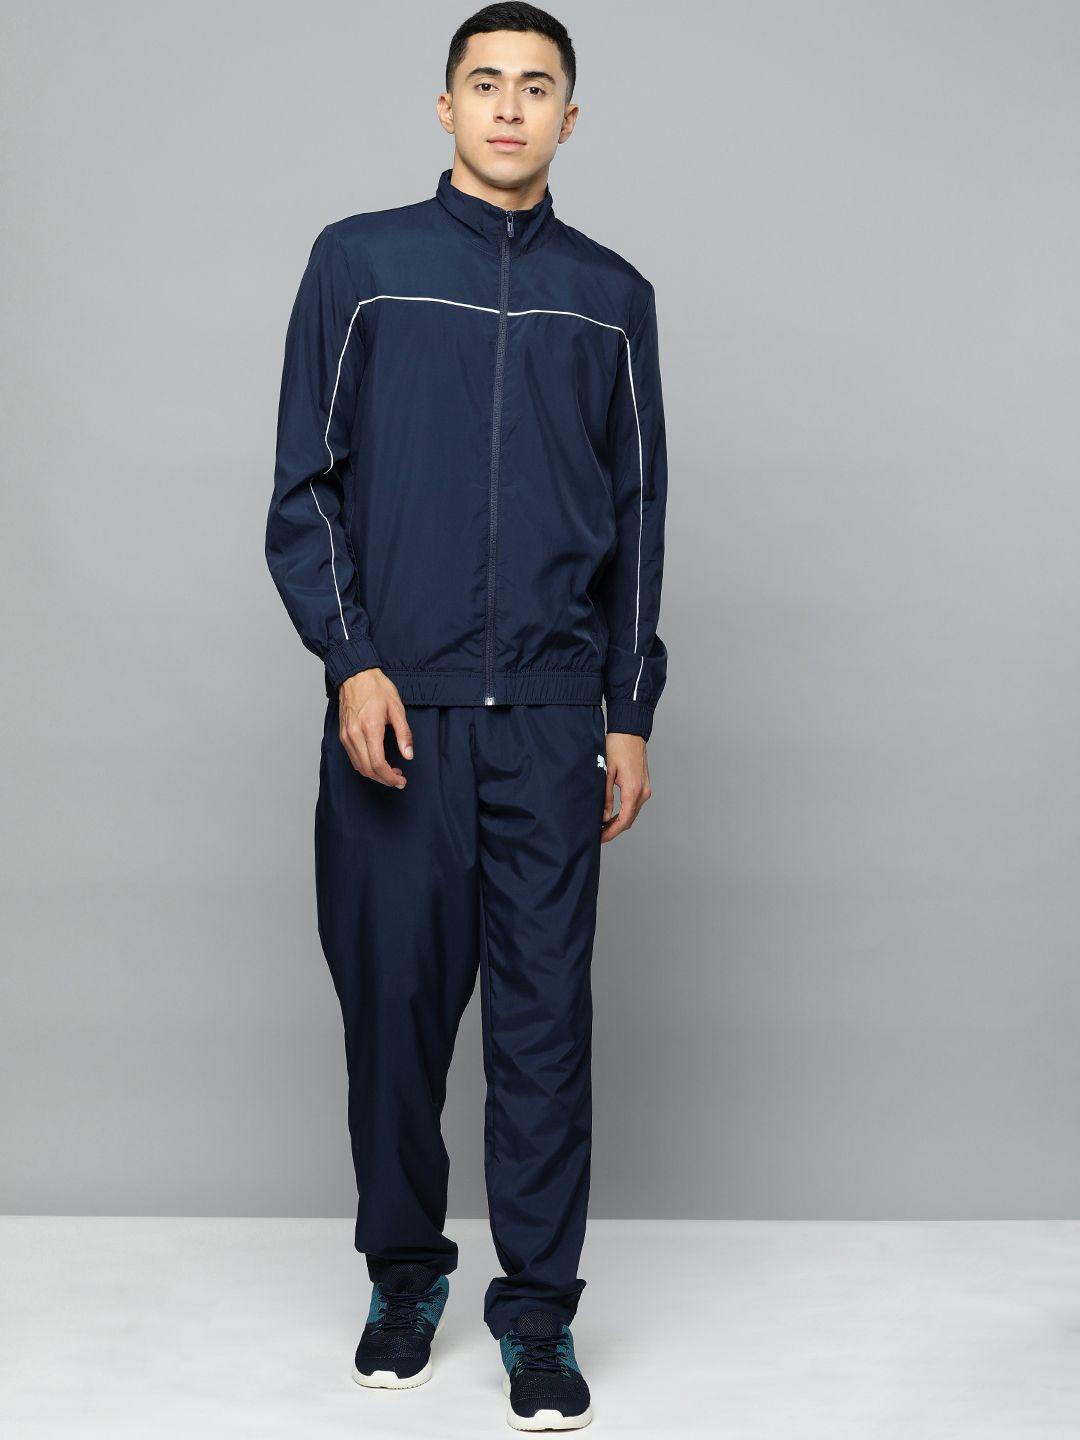 puma-men-navy-blue-classic-track-suit